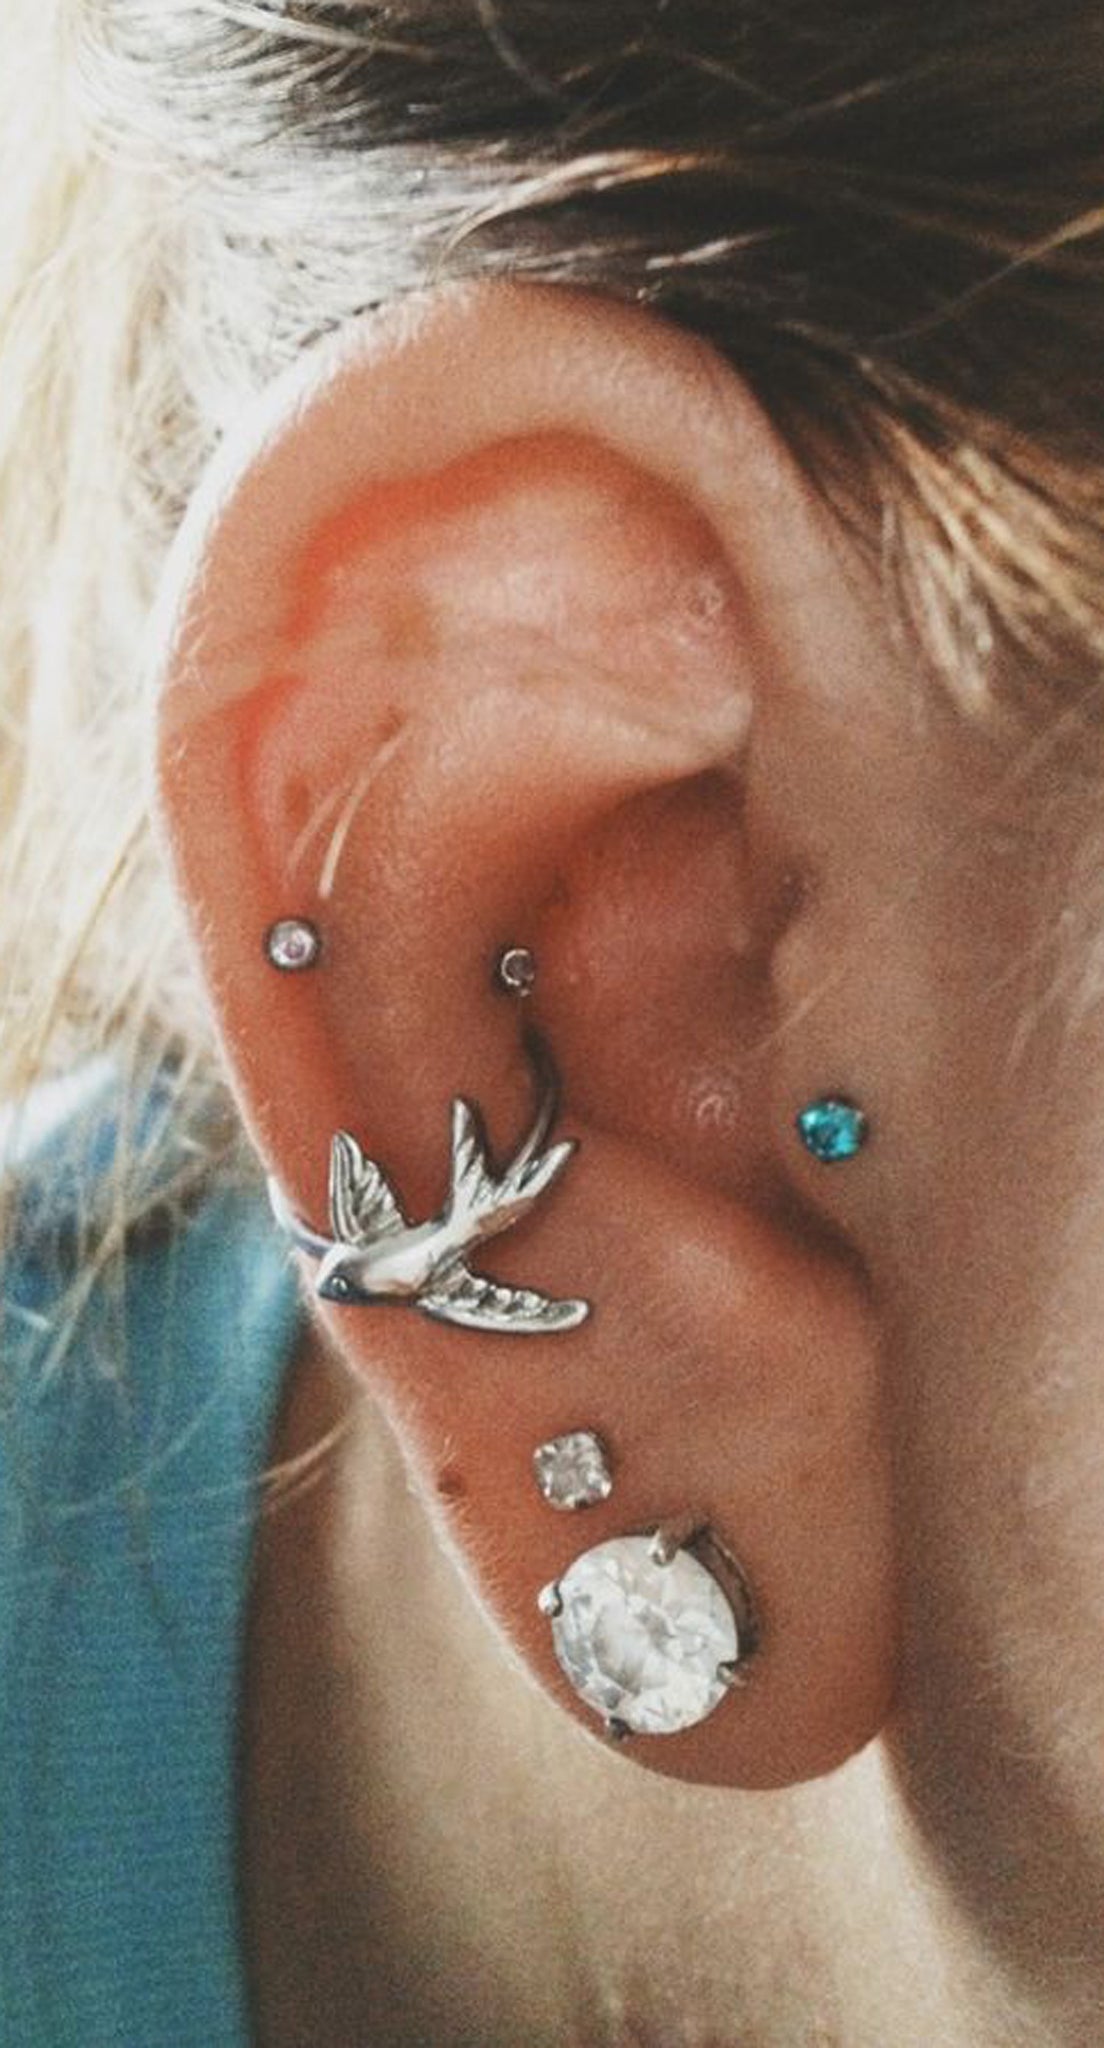 Cute Ear Piercing Ideas - Conch Piercing Hoop - Tragus Piercing Jewelry at MyBodiArt.com